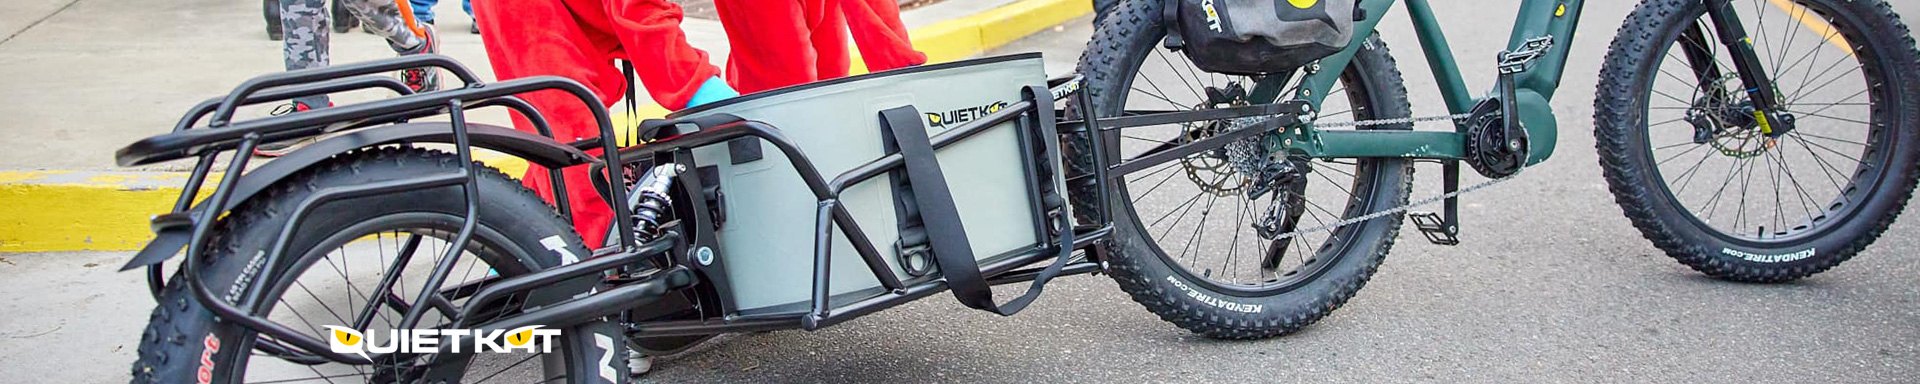 QuietKat Bike Child Seats & Trailers